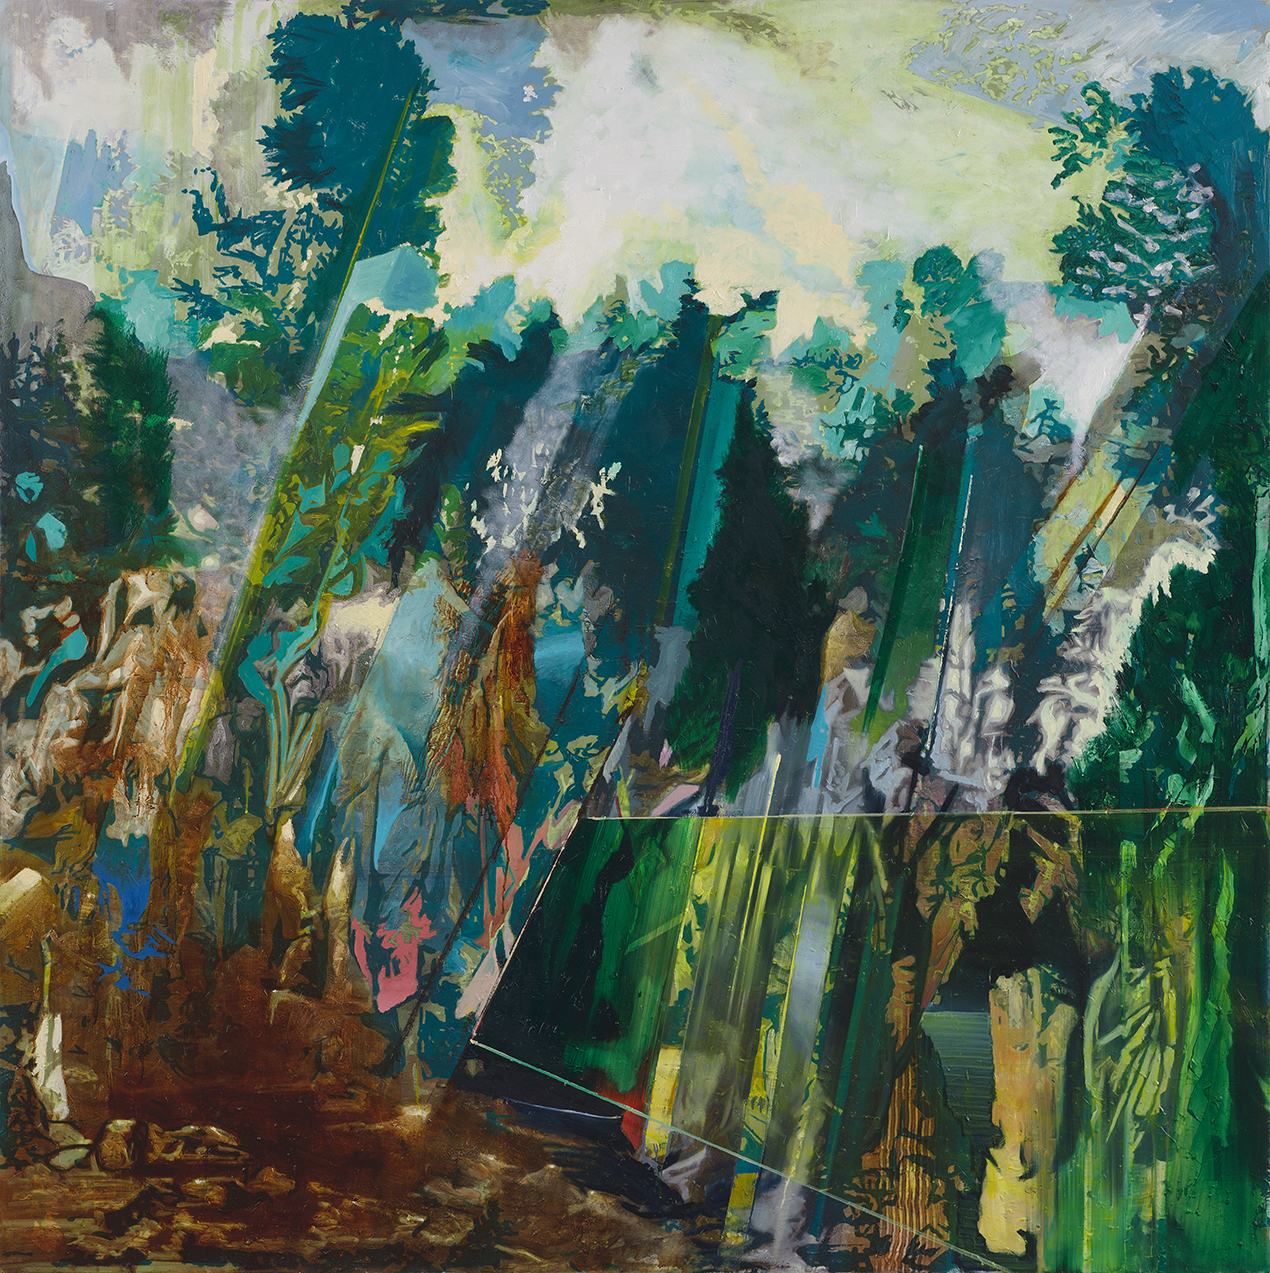 Oren Eliav, Procession, 2015, oil on canvas, 200 x 200 cm